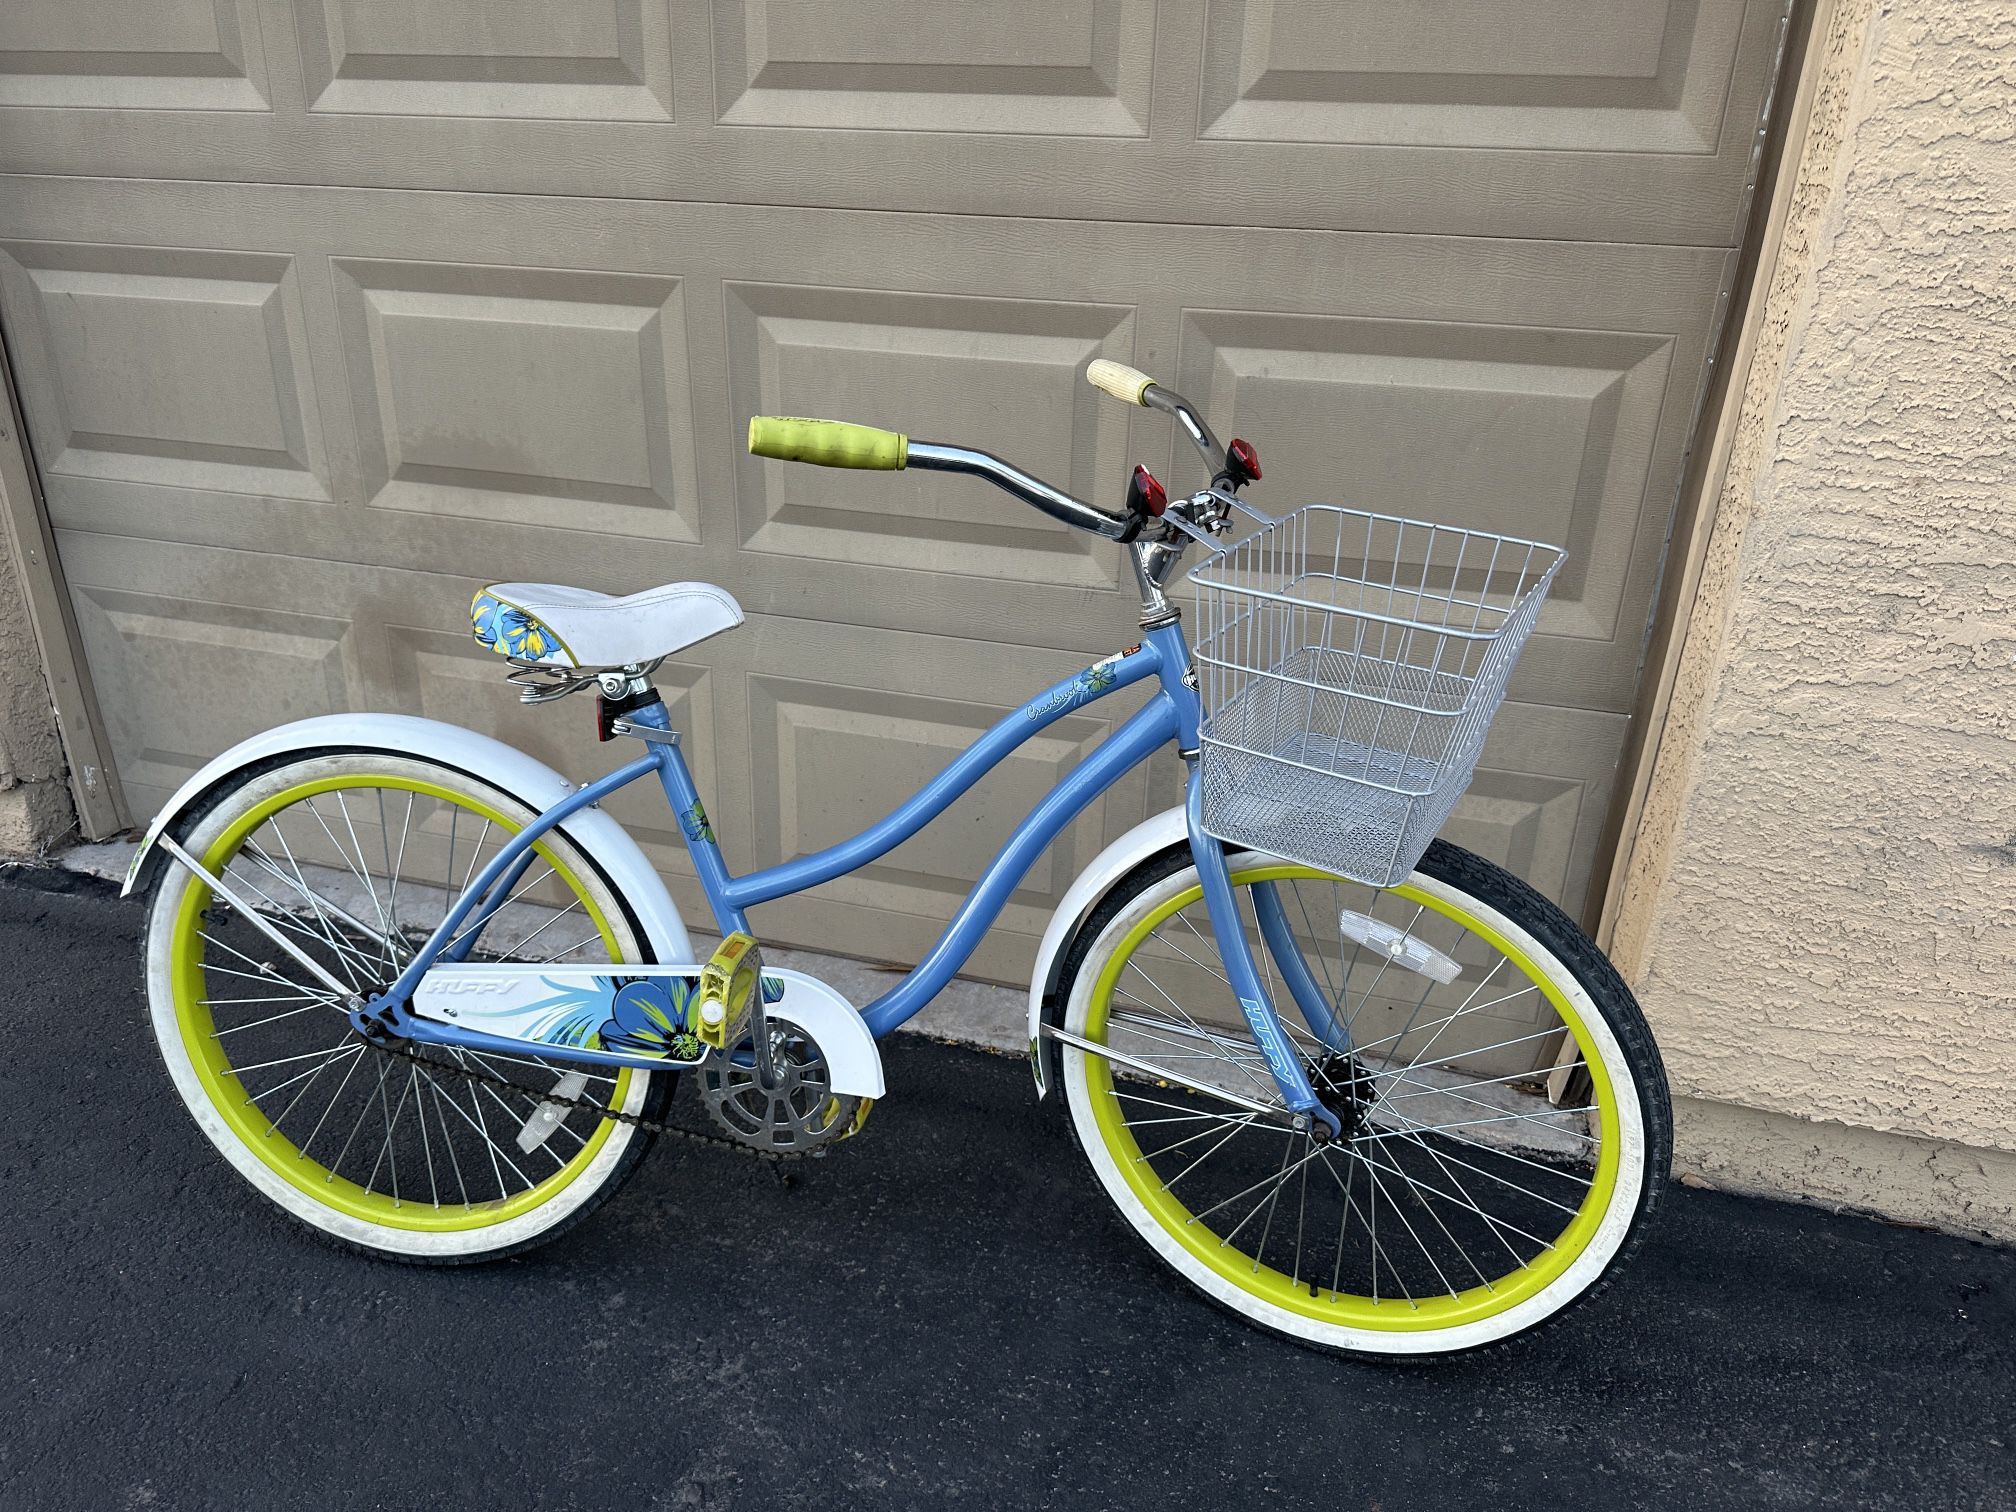 Huffy Cranbrook Women's Cruiser Bike, Blue Lime Green, 24-inch